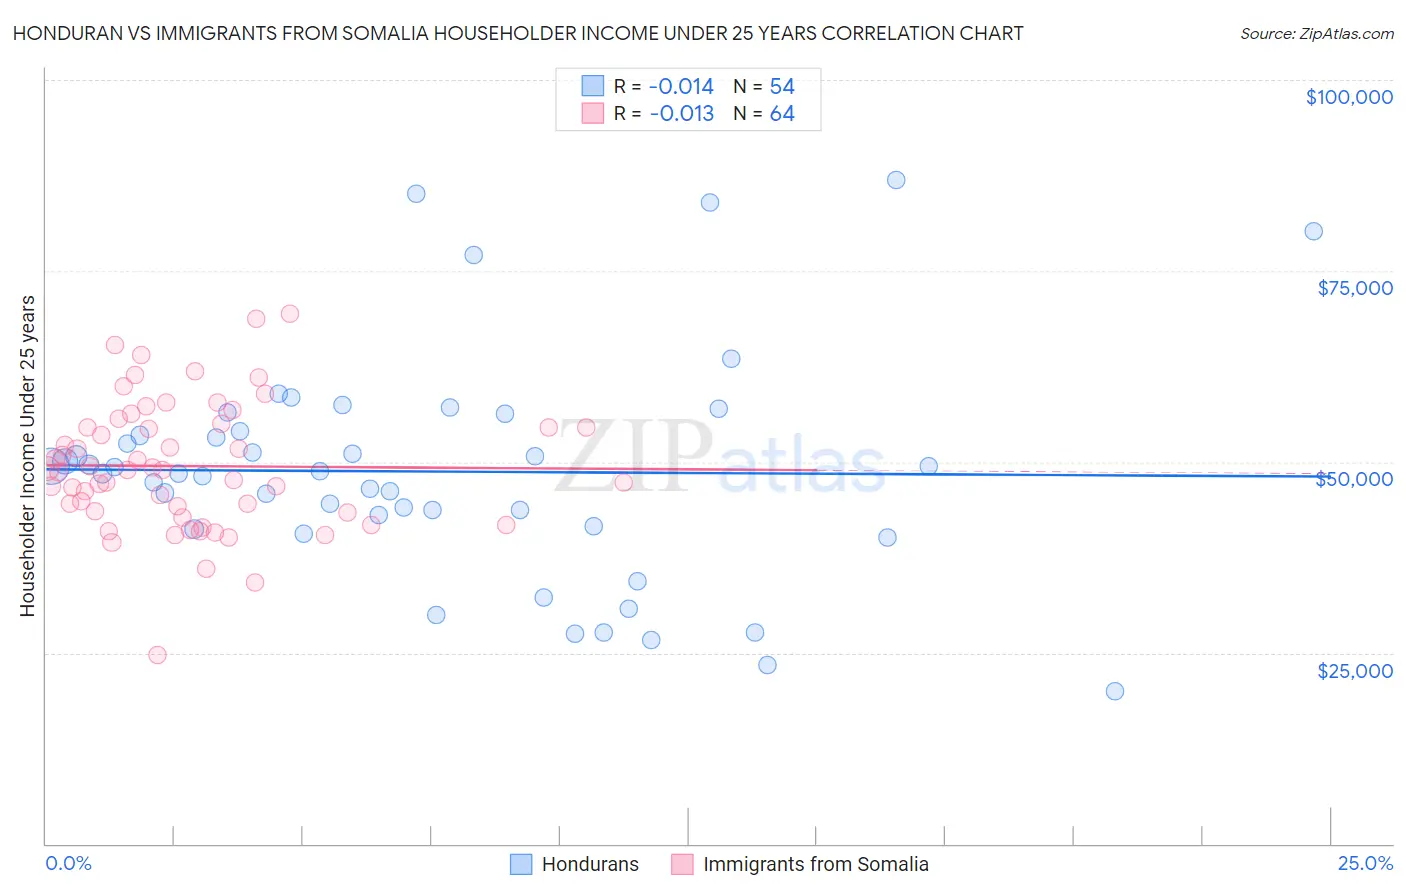 Honduran vs Immigrants from Somalia Householder Income Under 25 years